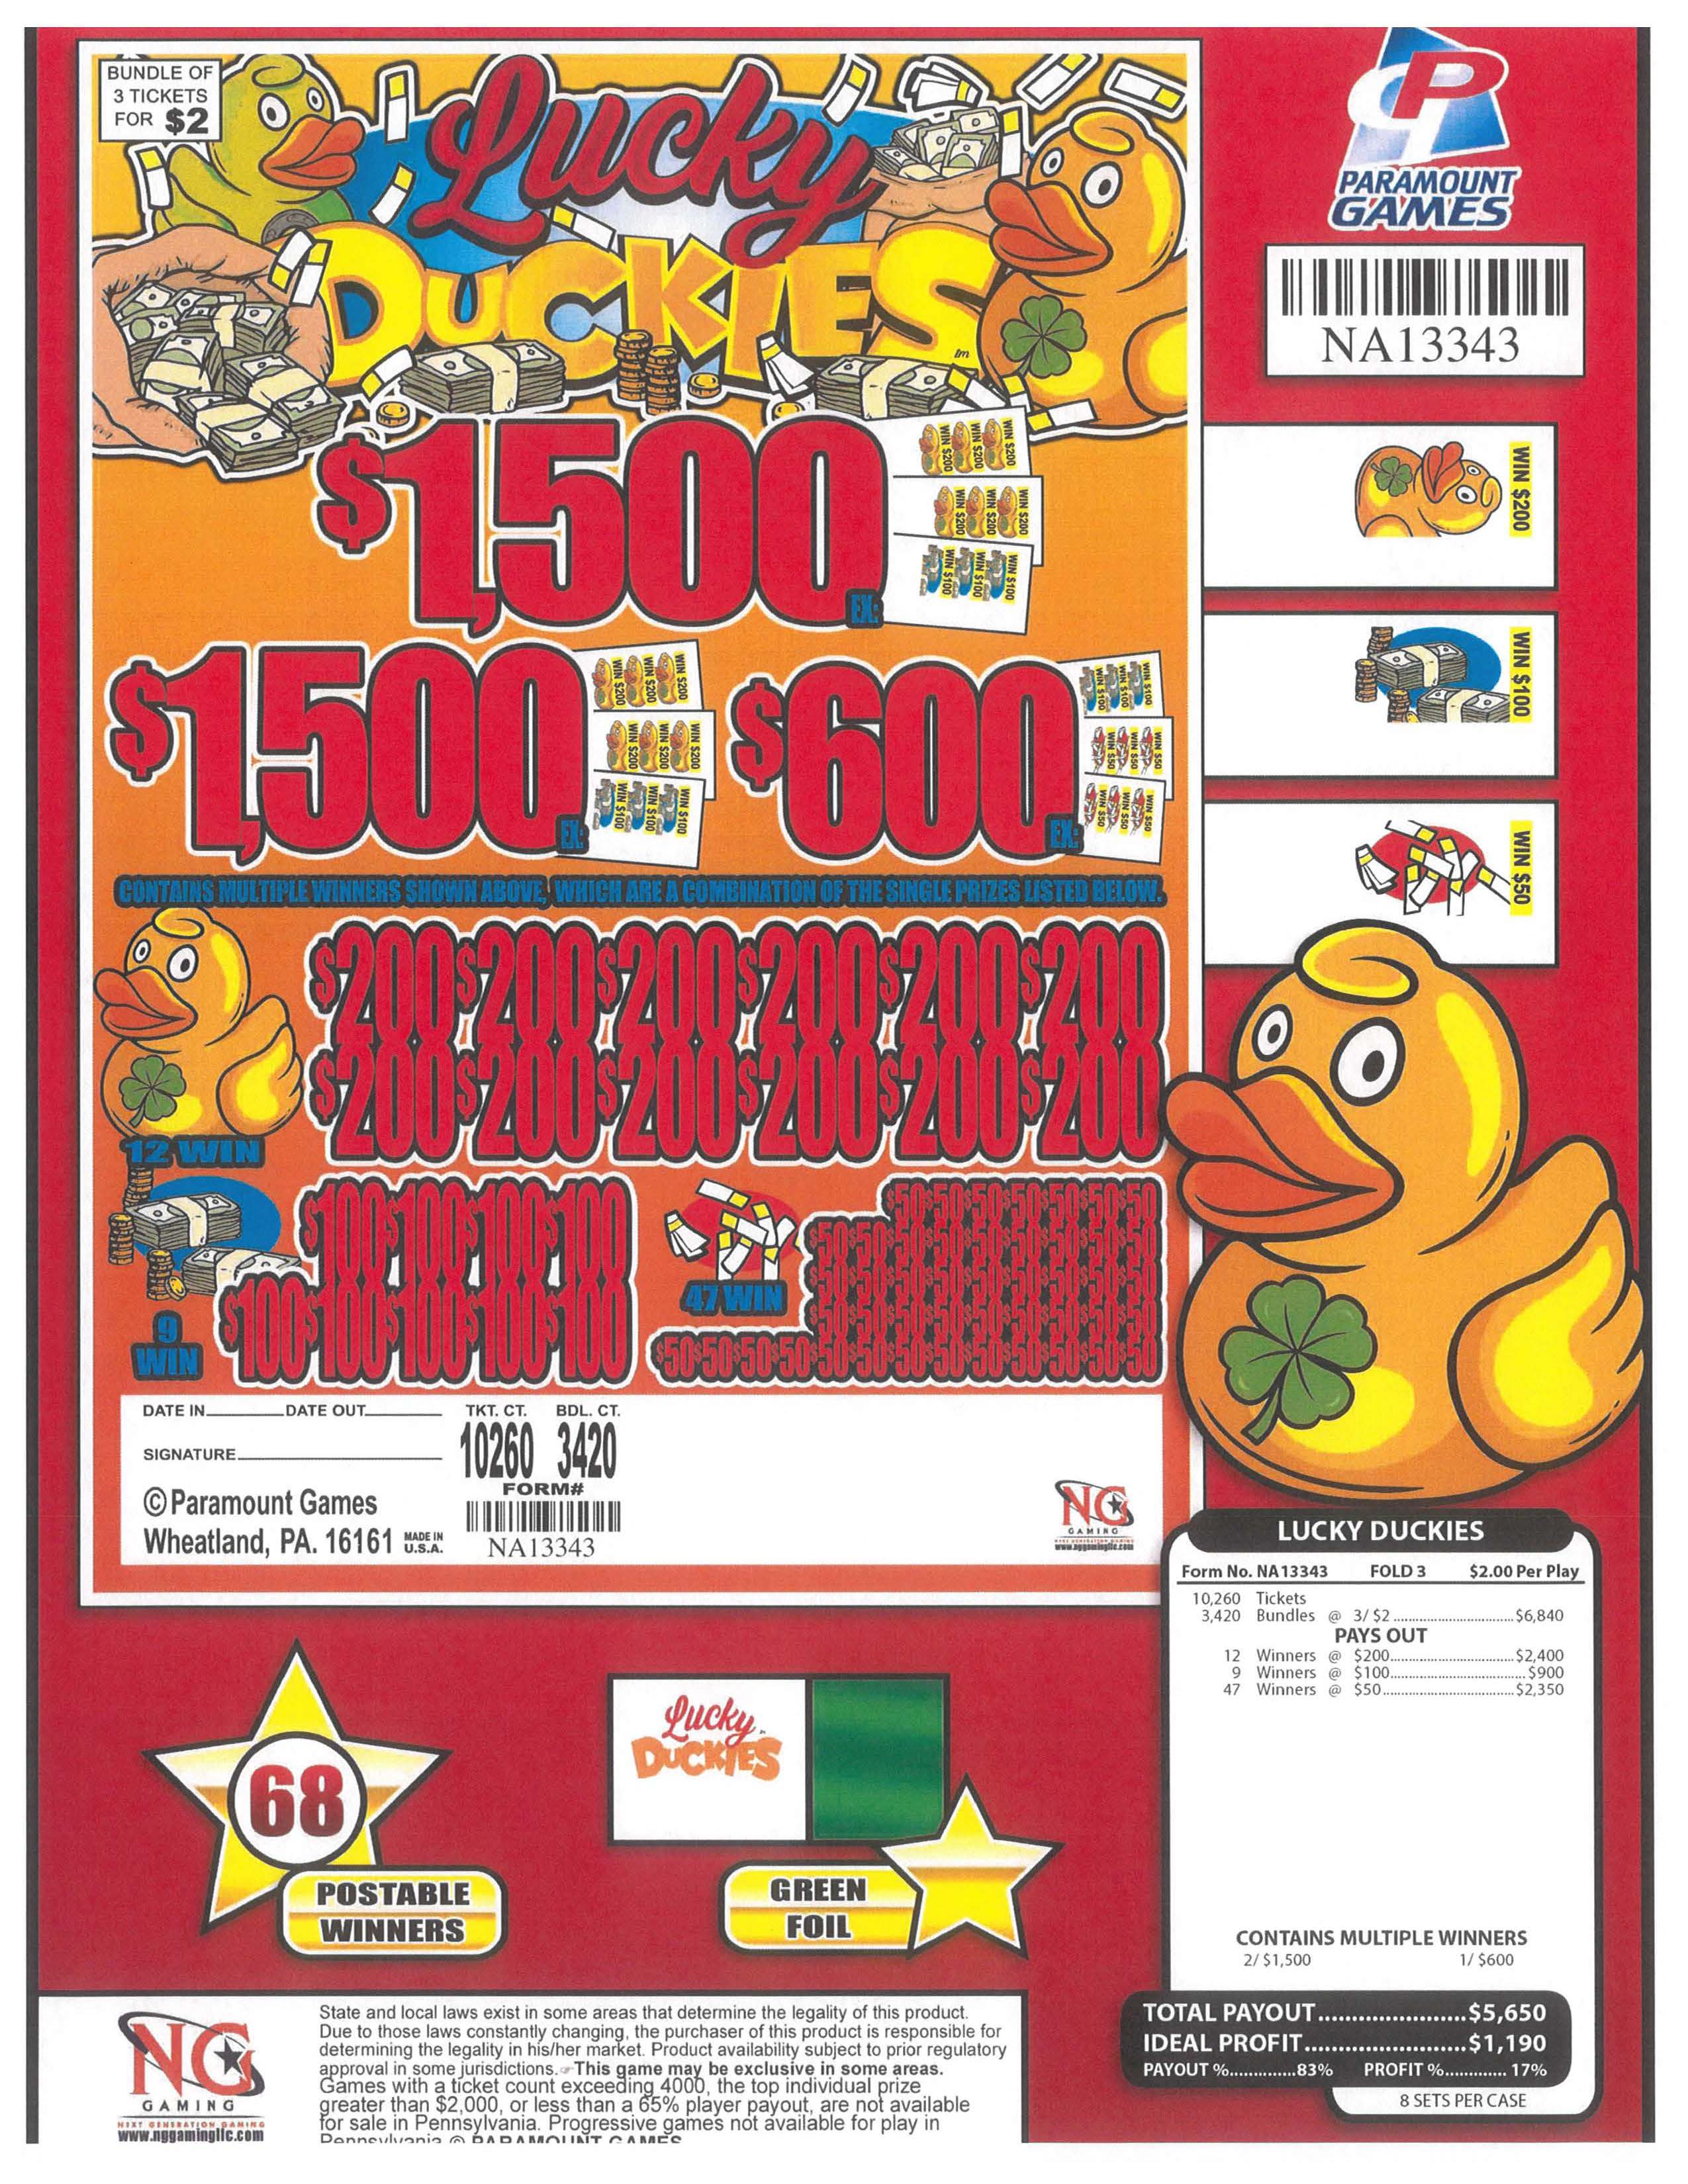 Lucky Duckies - $2 Jar Ticket